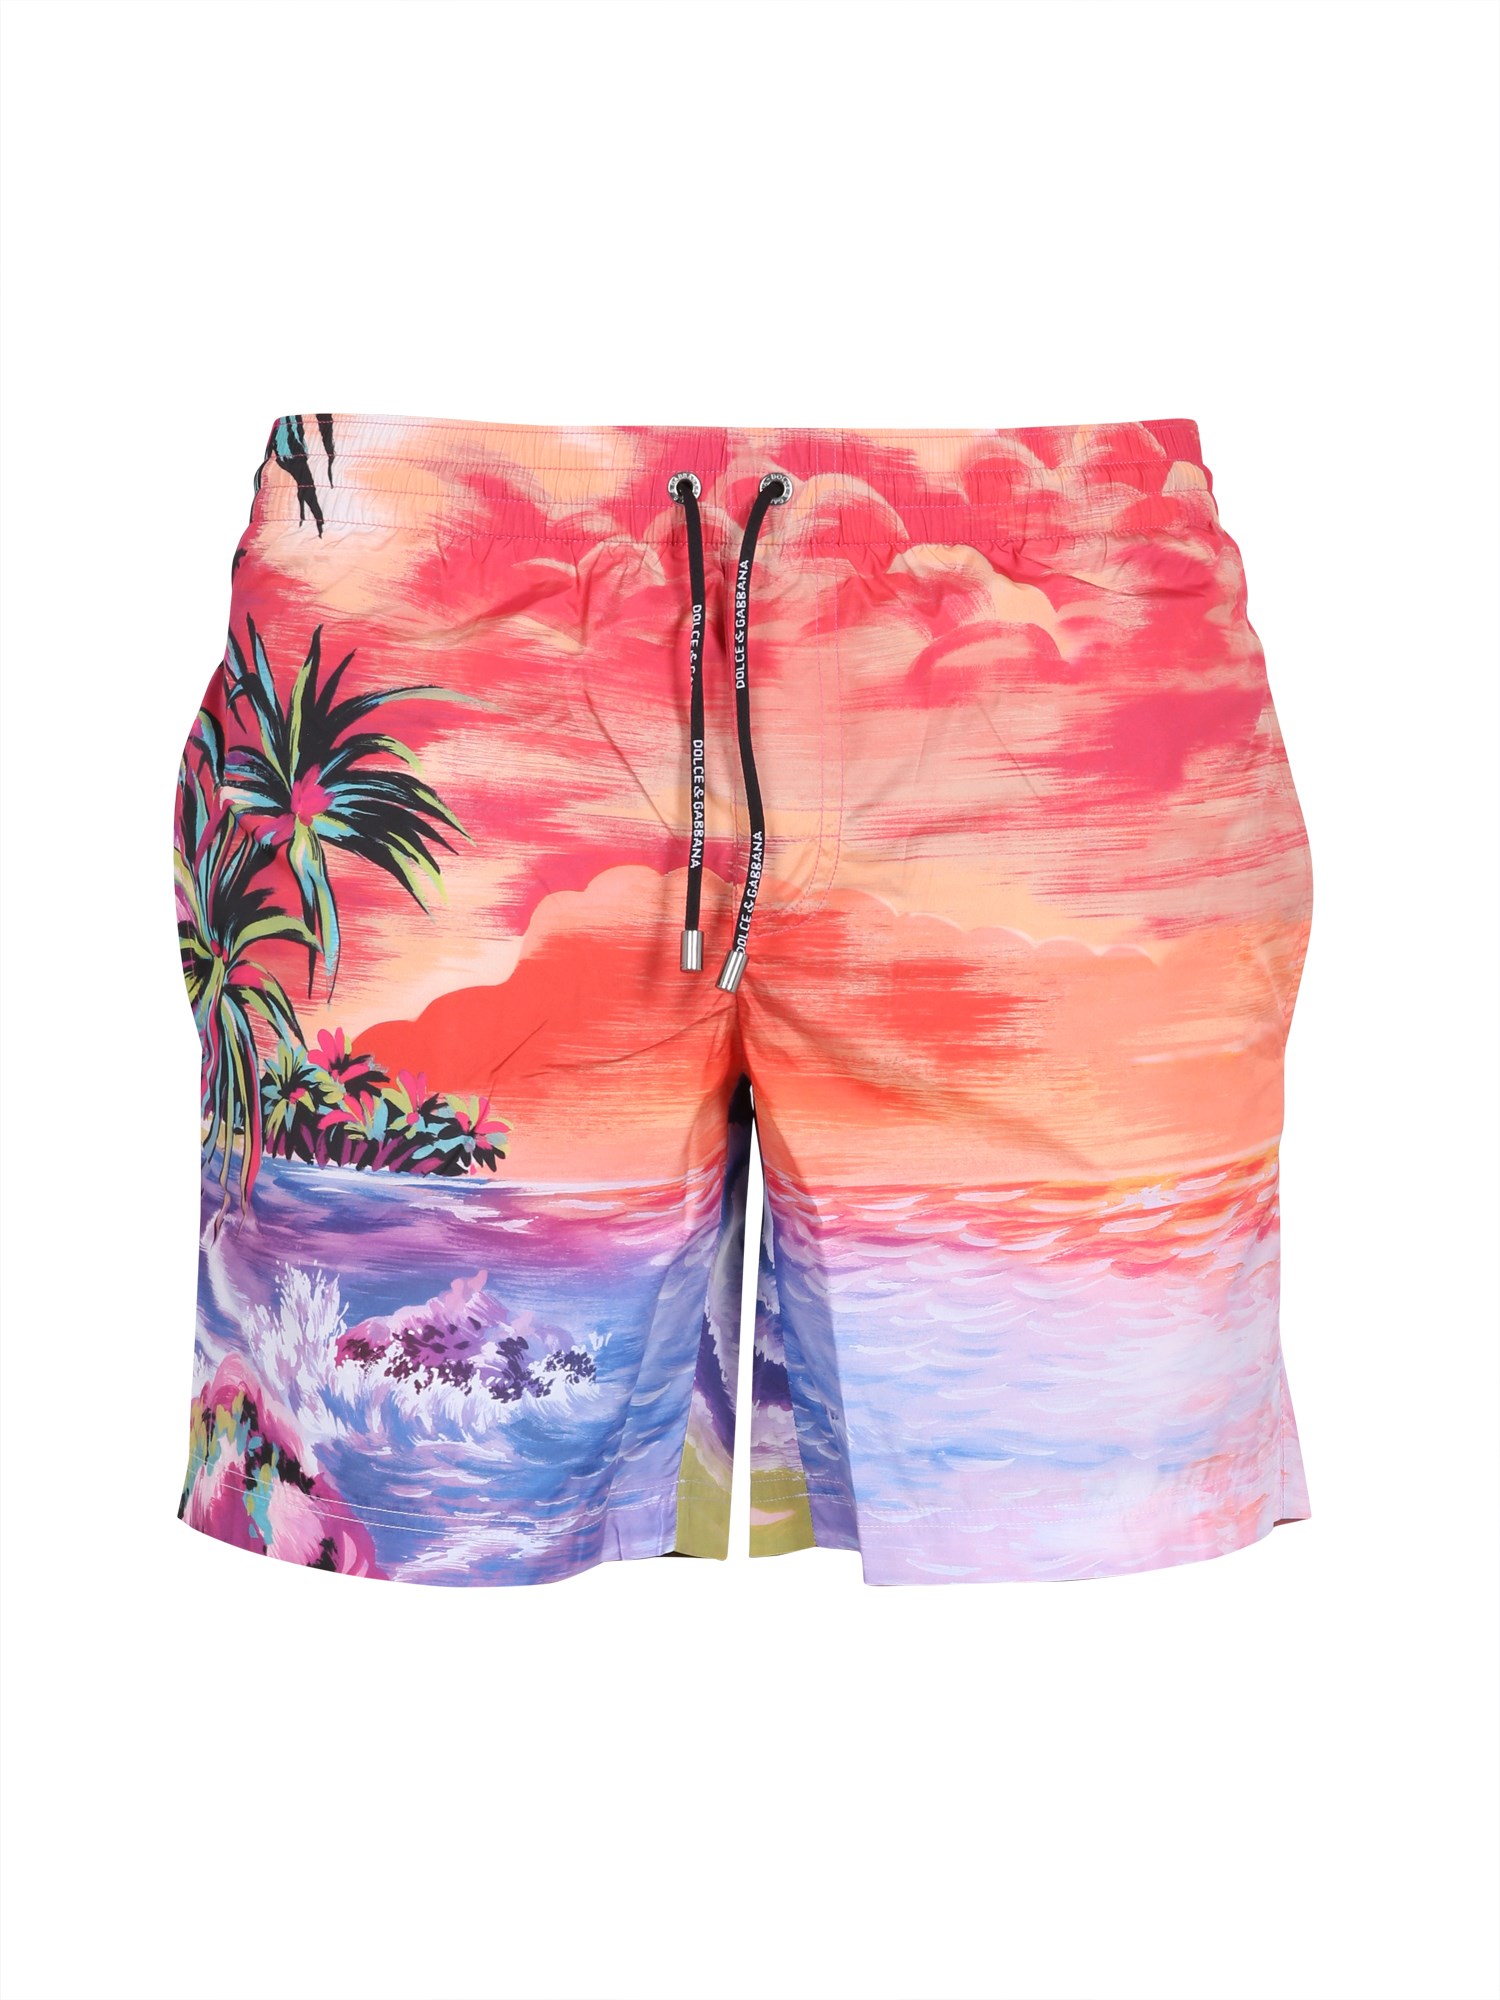 dolce & gabbana sunset print swimsuit